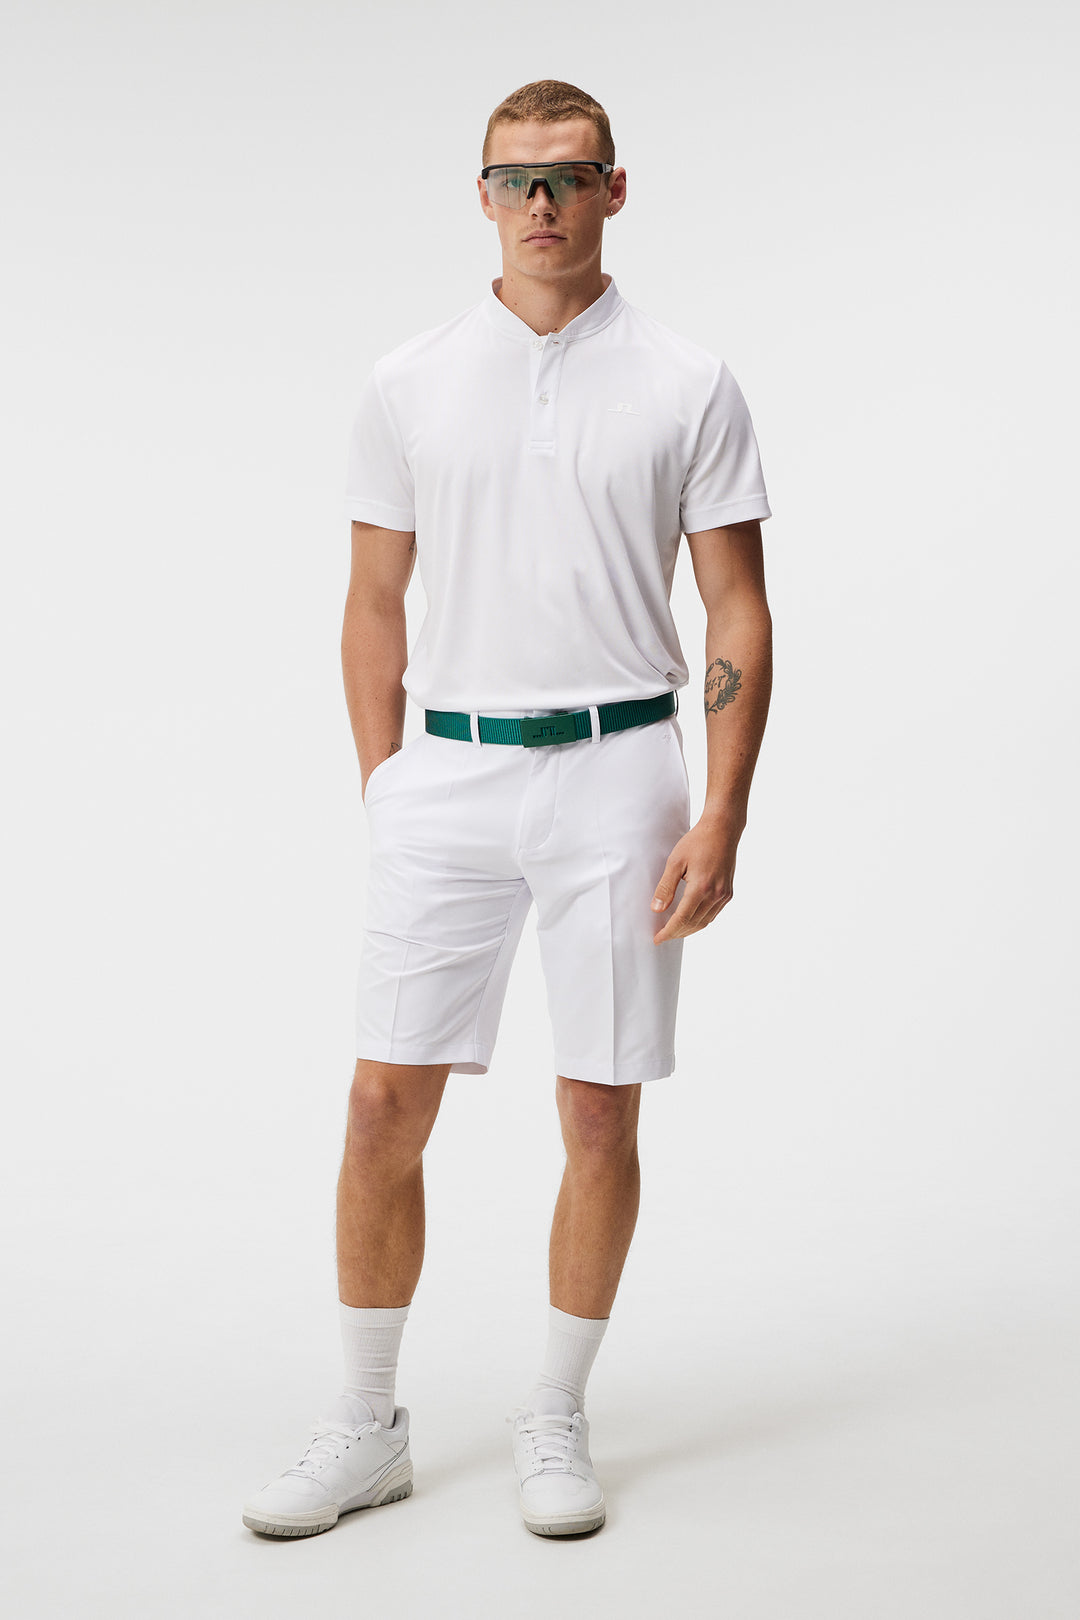 J.Lindeberg Mens Somle Shorts - WHITE